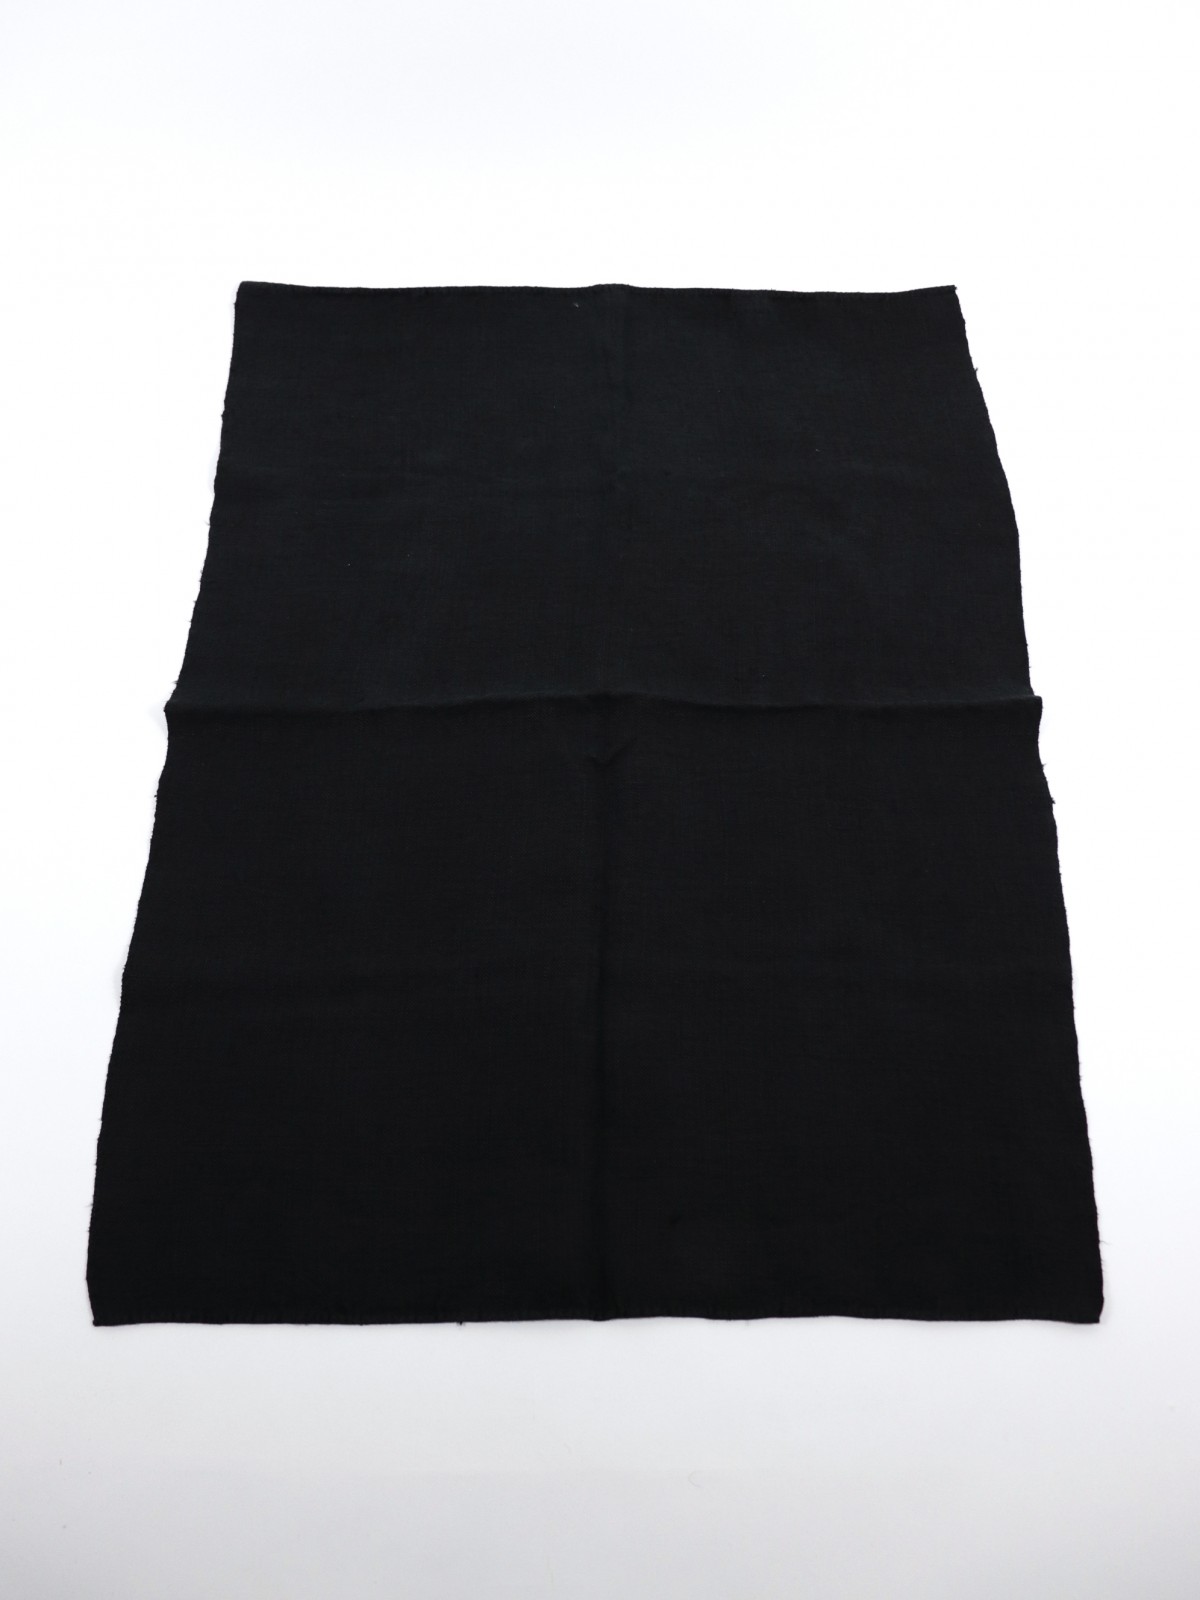 Black dyed linen, French linen, dead stock